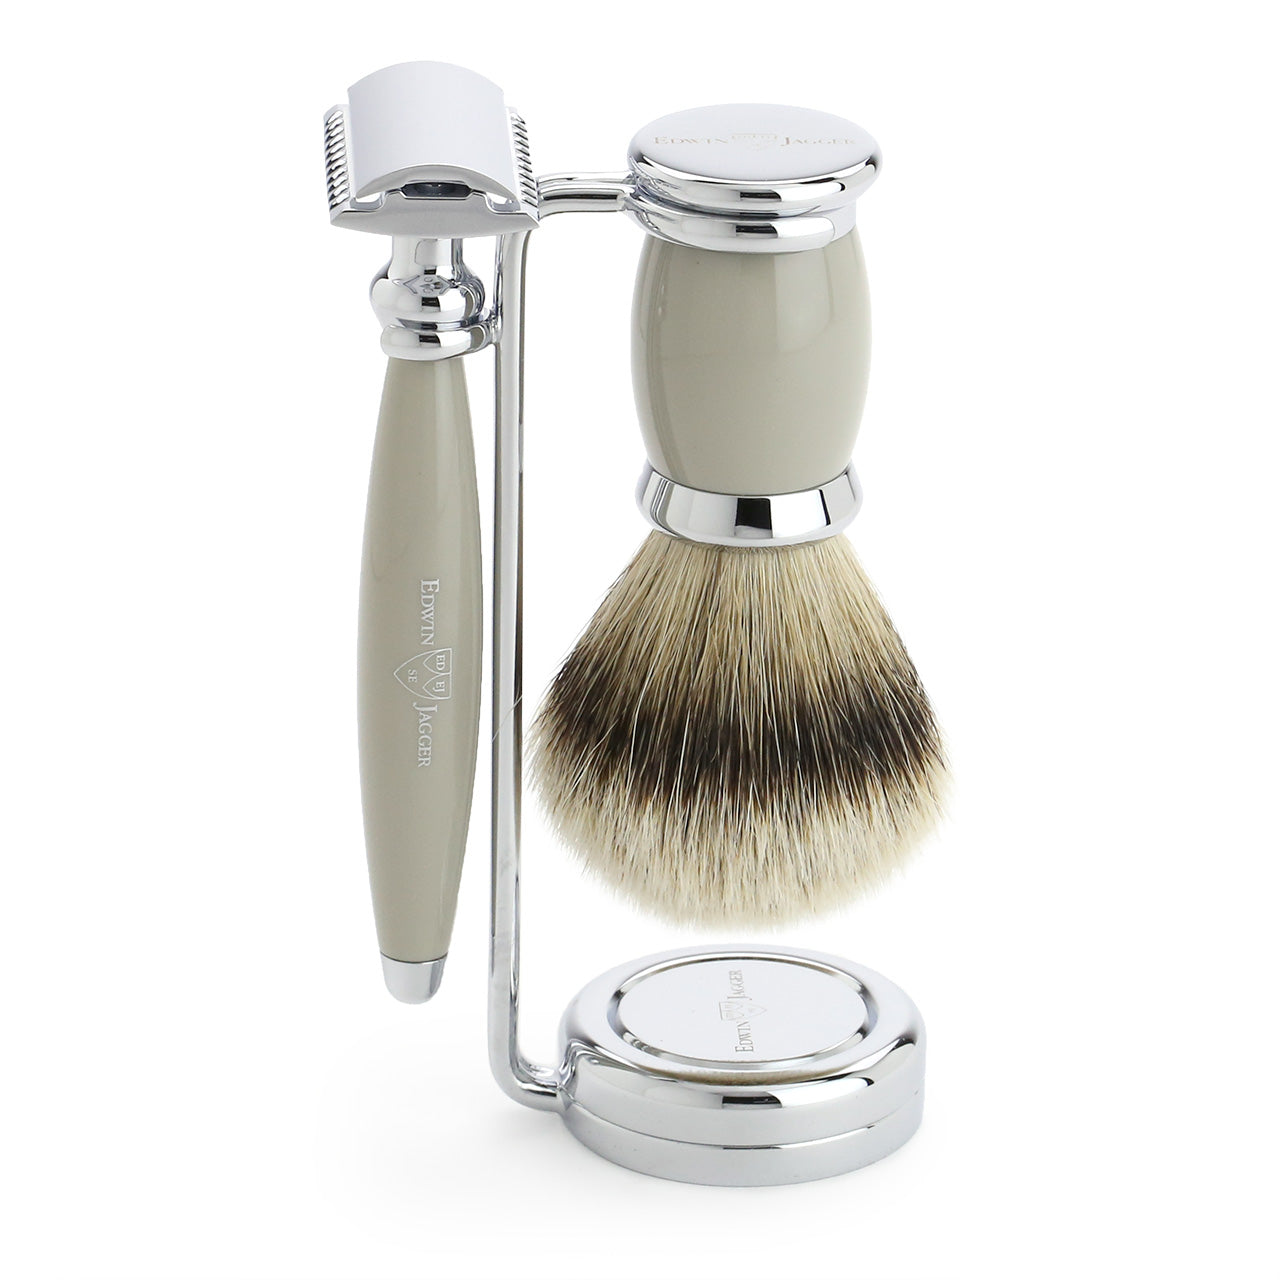 Shaving set with Super Badger Shaving Brush, Safety Razor and Stand